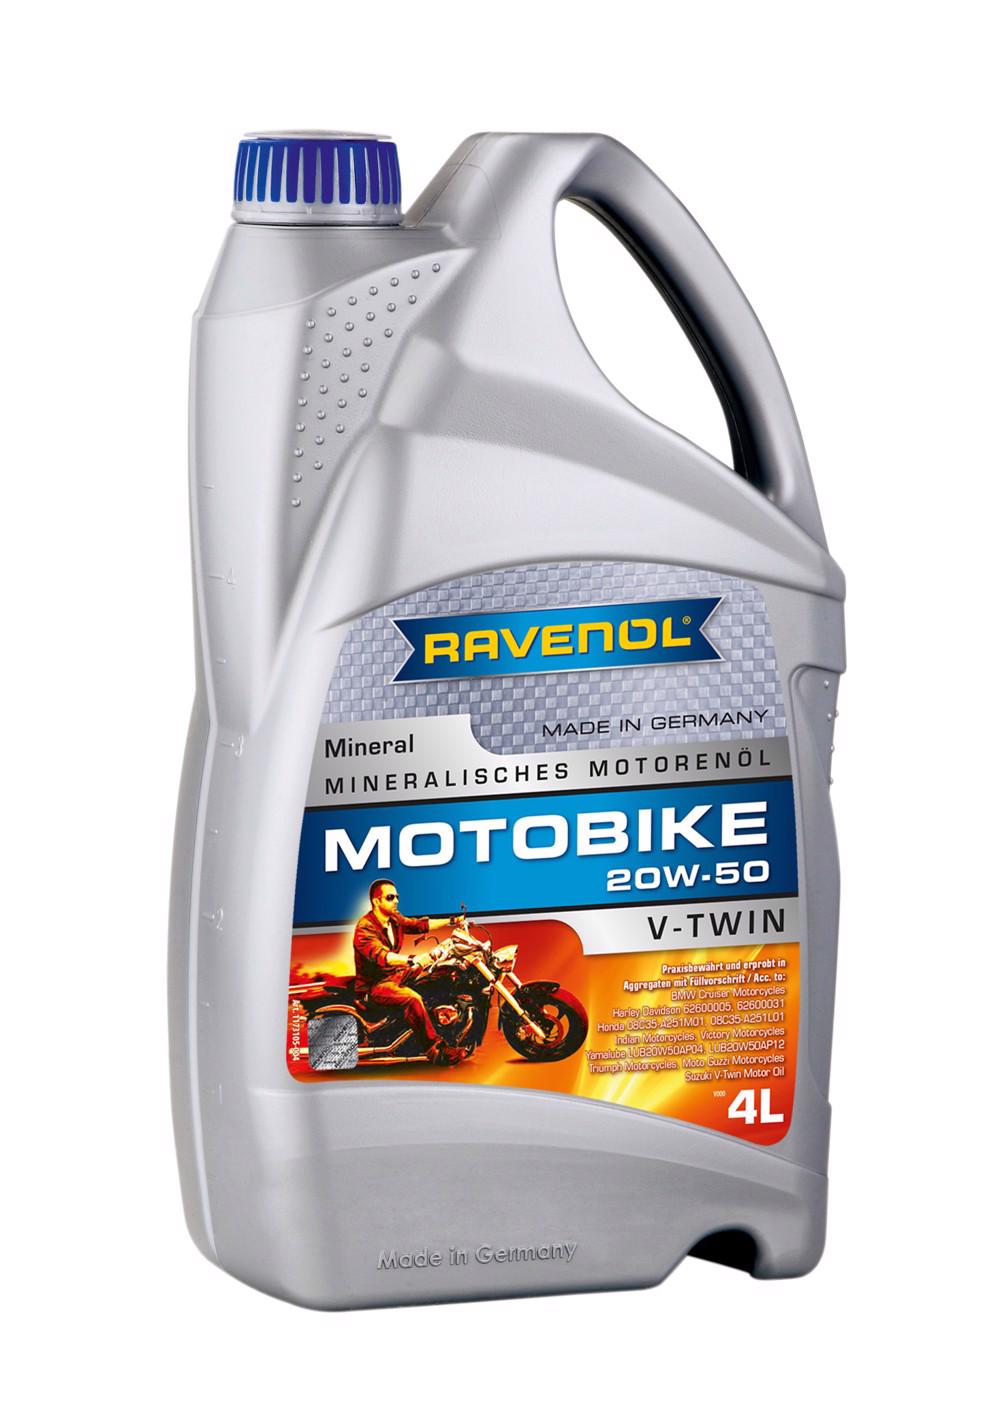 RAVENOL Motobike V-Twin SAE 20W-50 Mineral  4 L